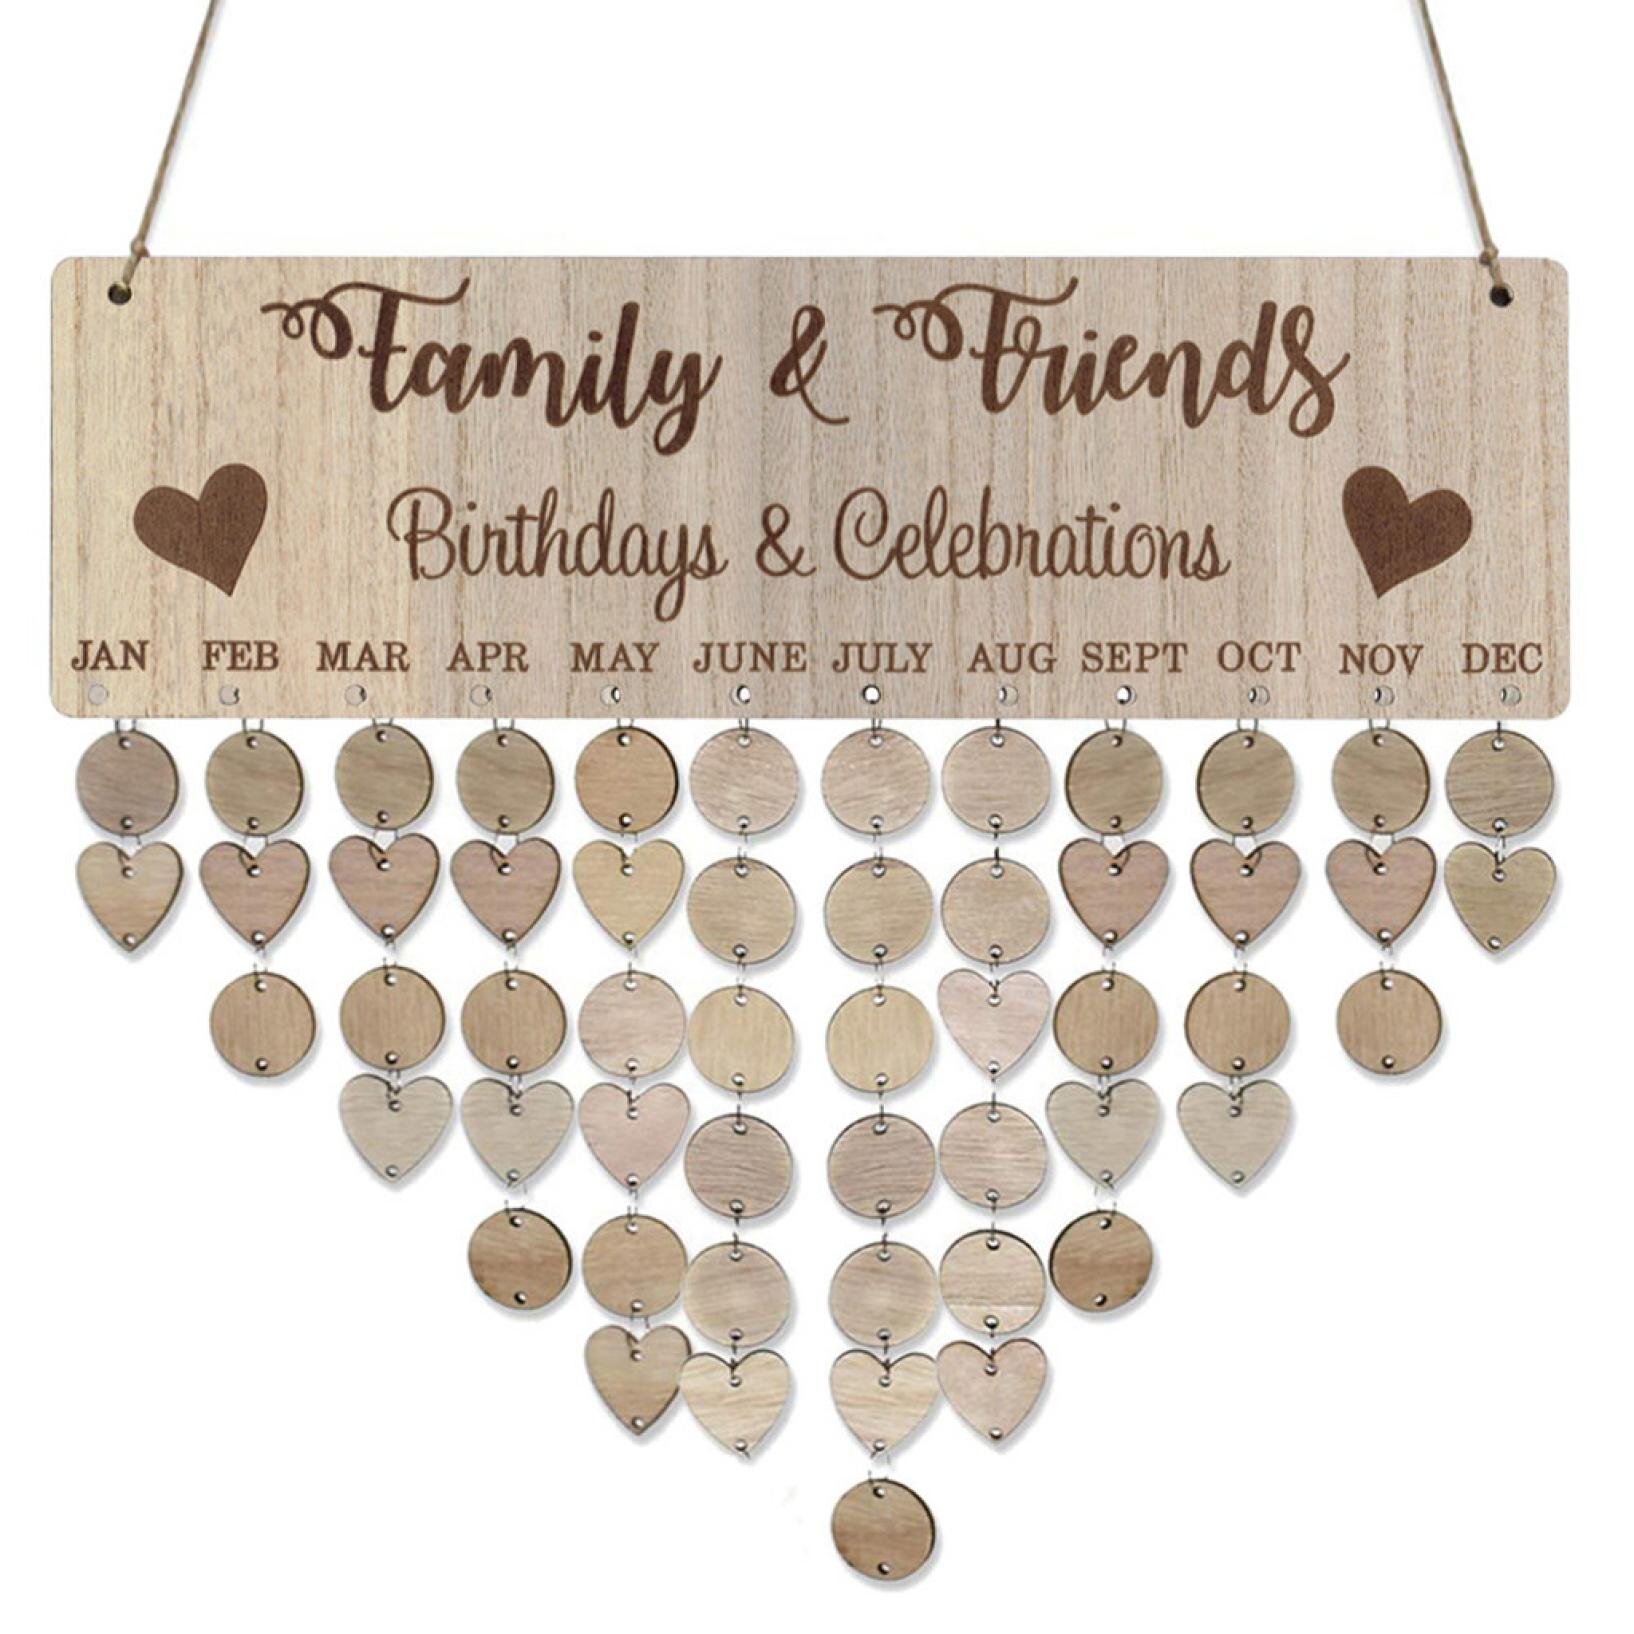 Wooden DIY Calendar Hanging Plaque Board Family BIRTHDAYS Reminder Home Decor